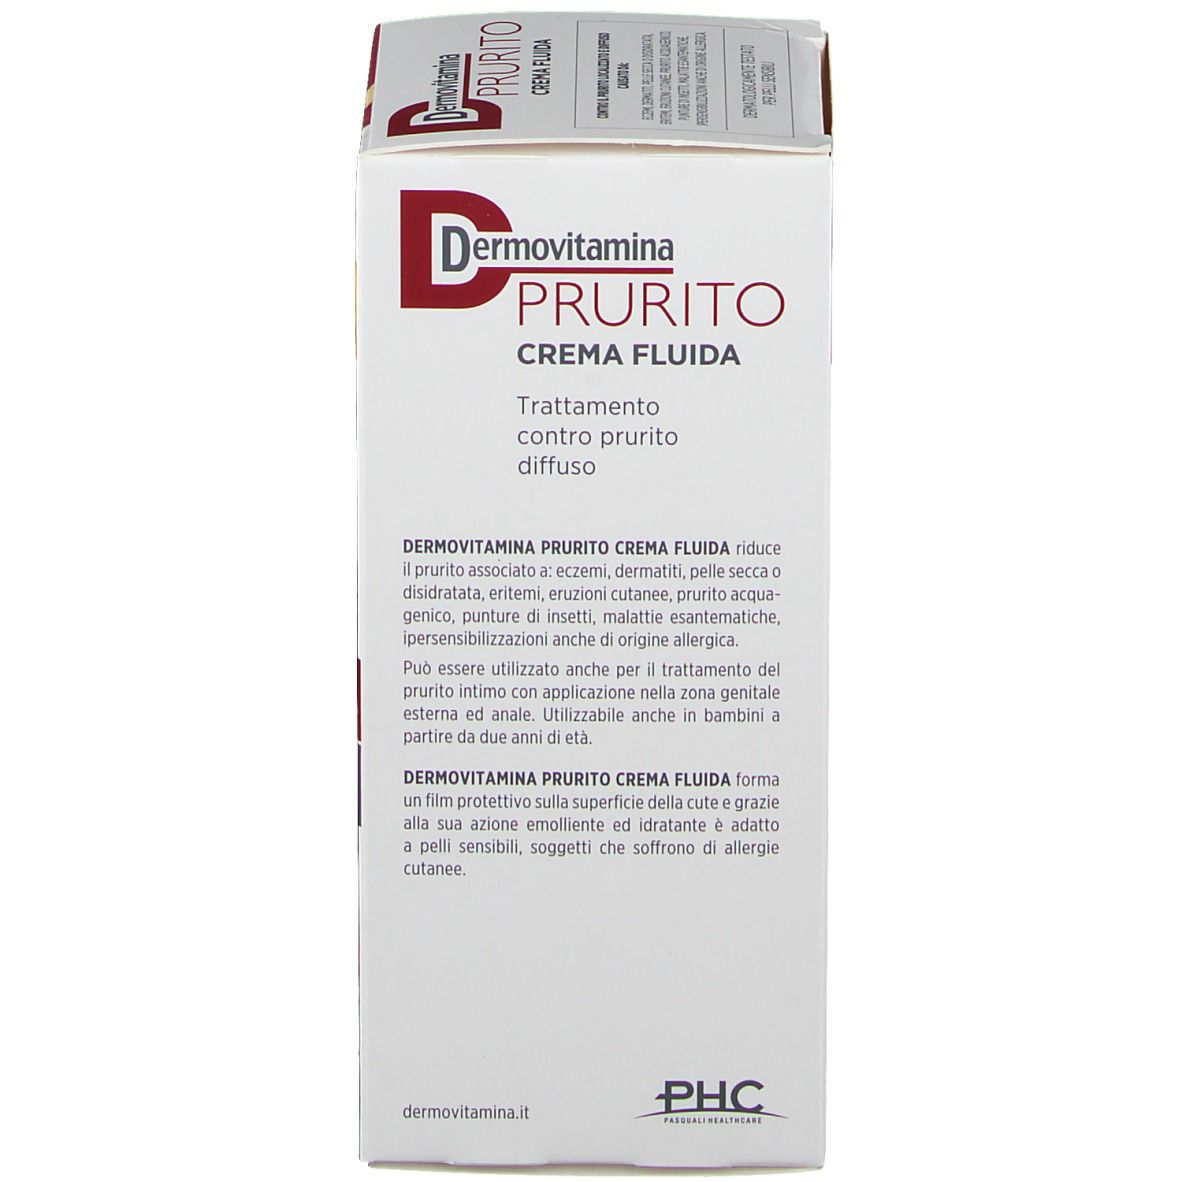 Dermovitamina Prurito Crema fluida